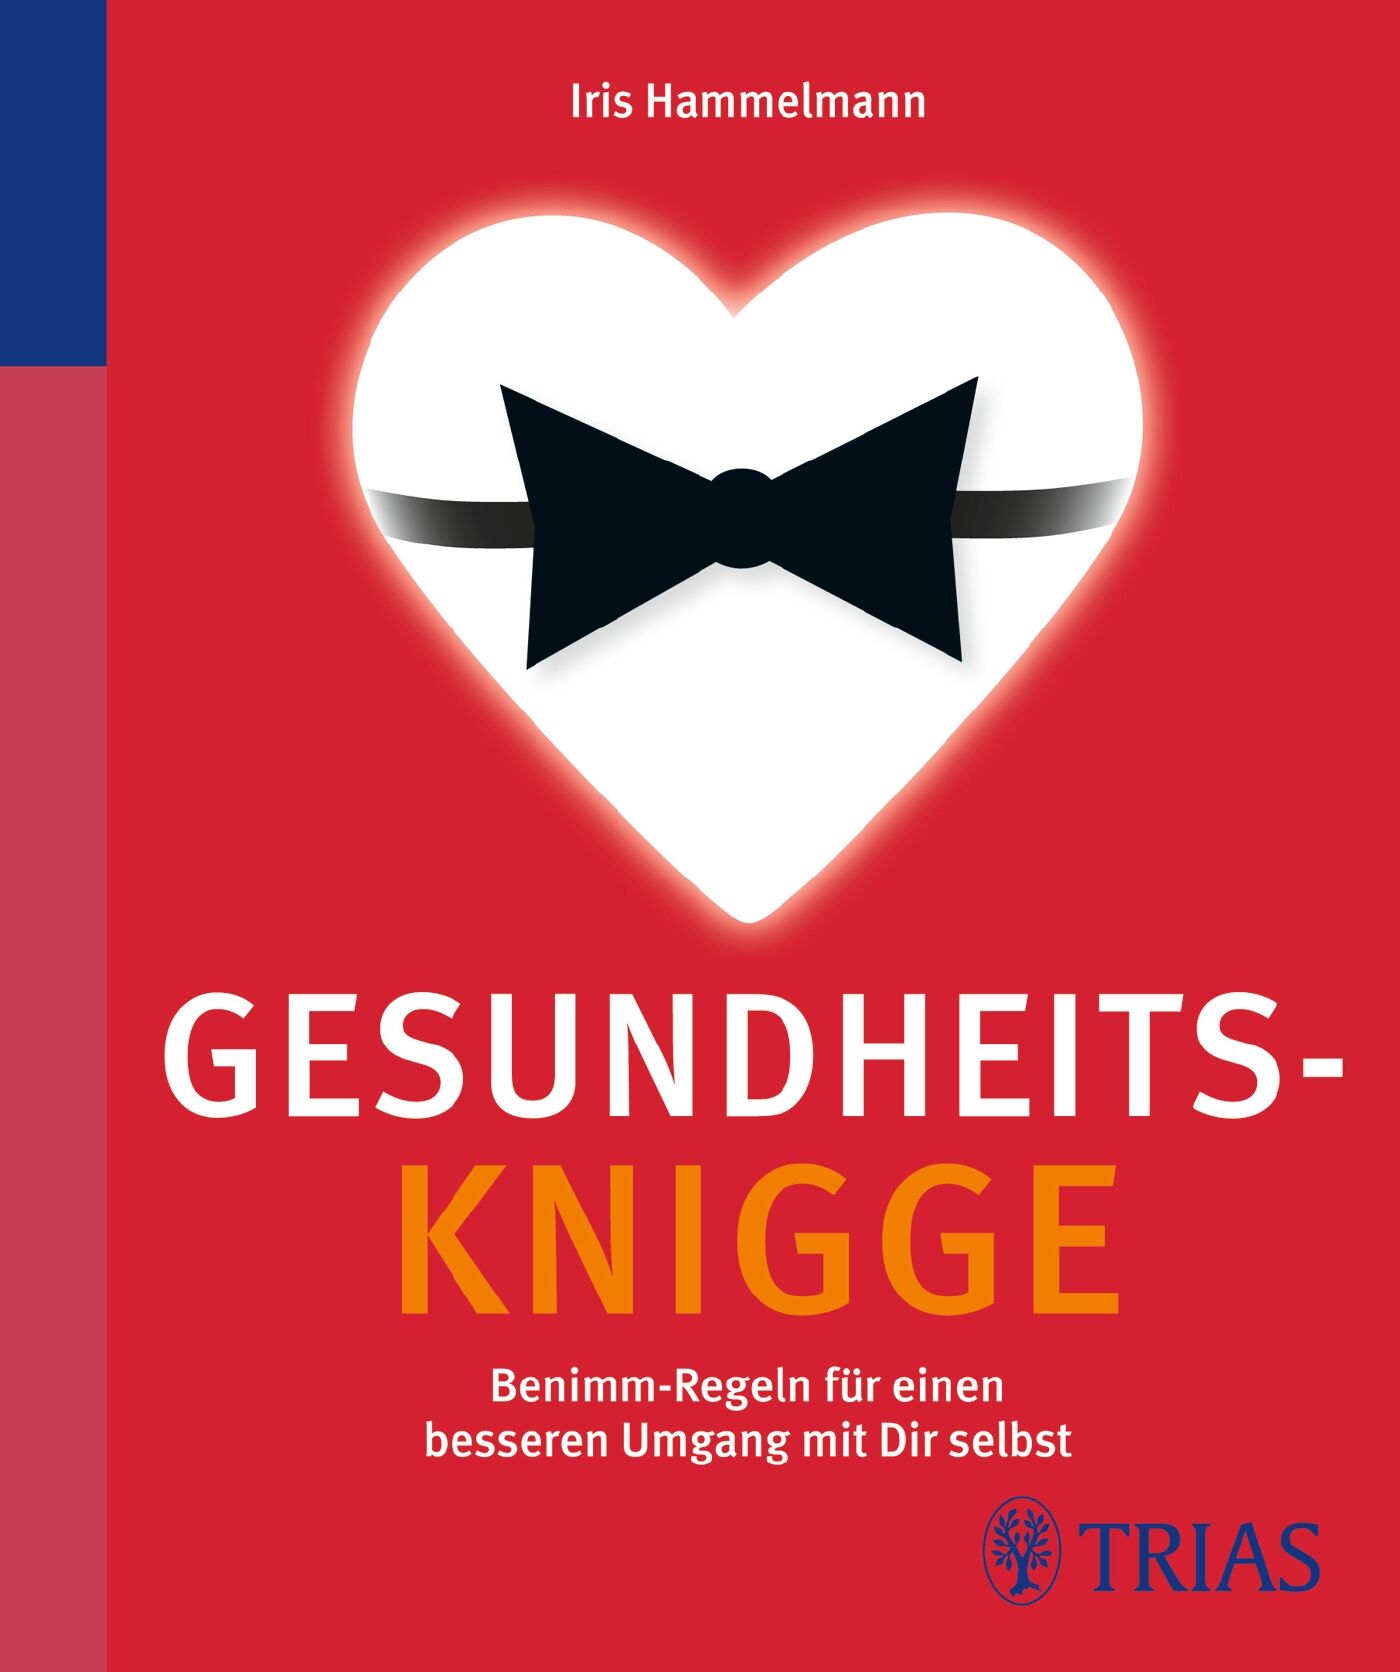 Gesundheits-Knigge, 9783830461883